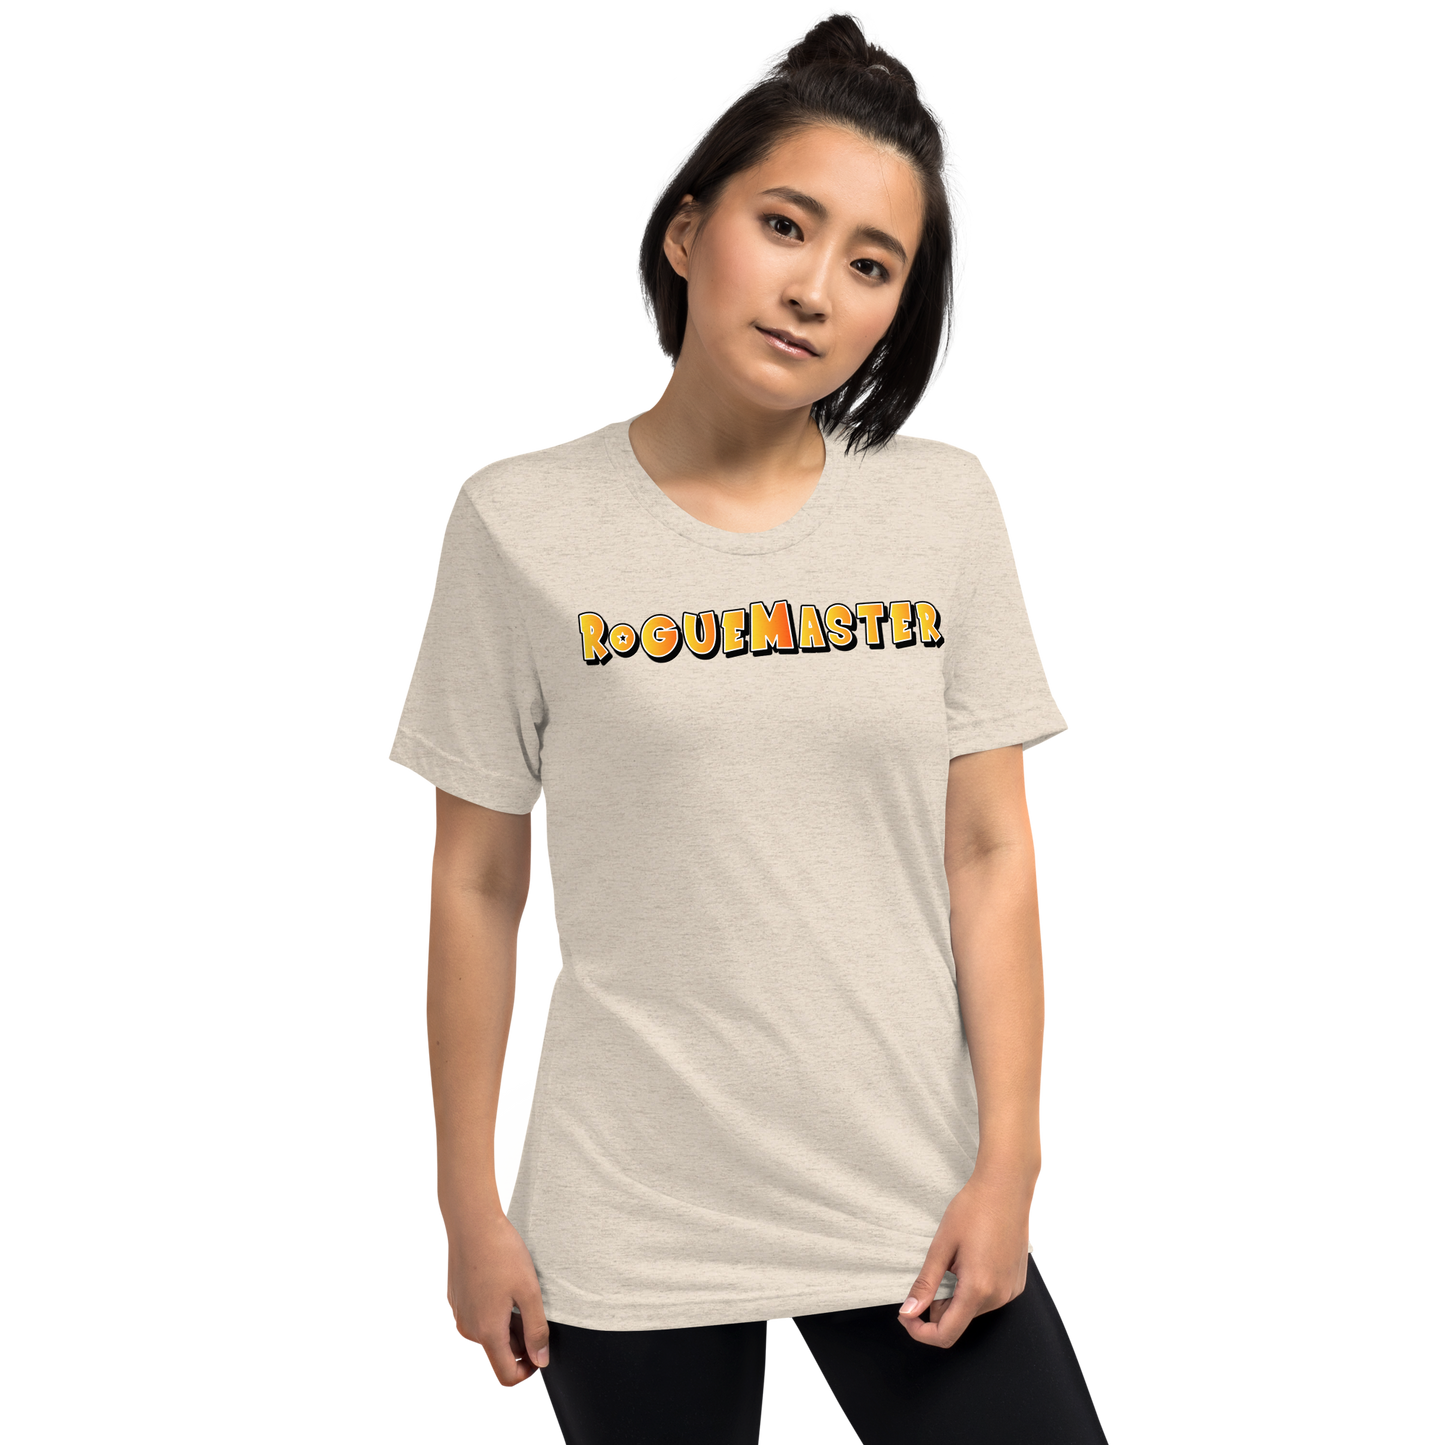 Apparel - Rogue Master Short Sleeve T-Shirt